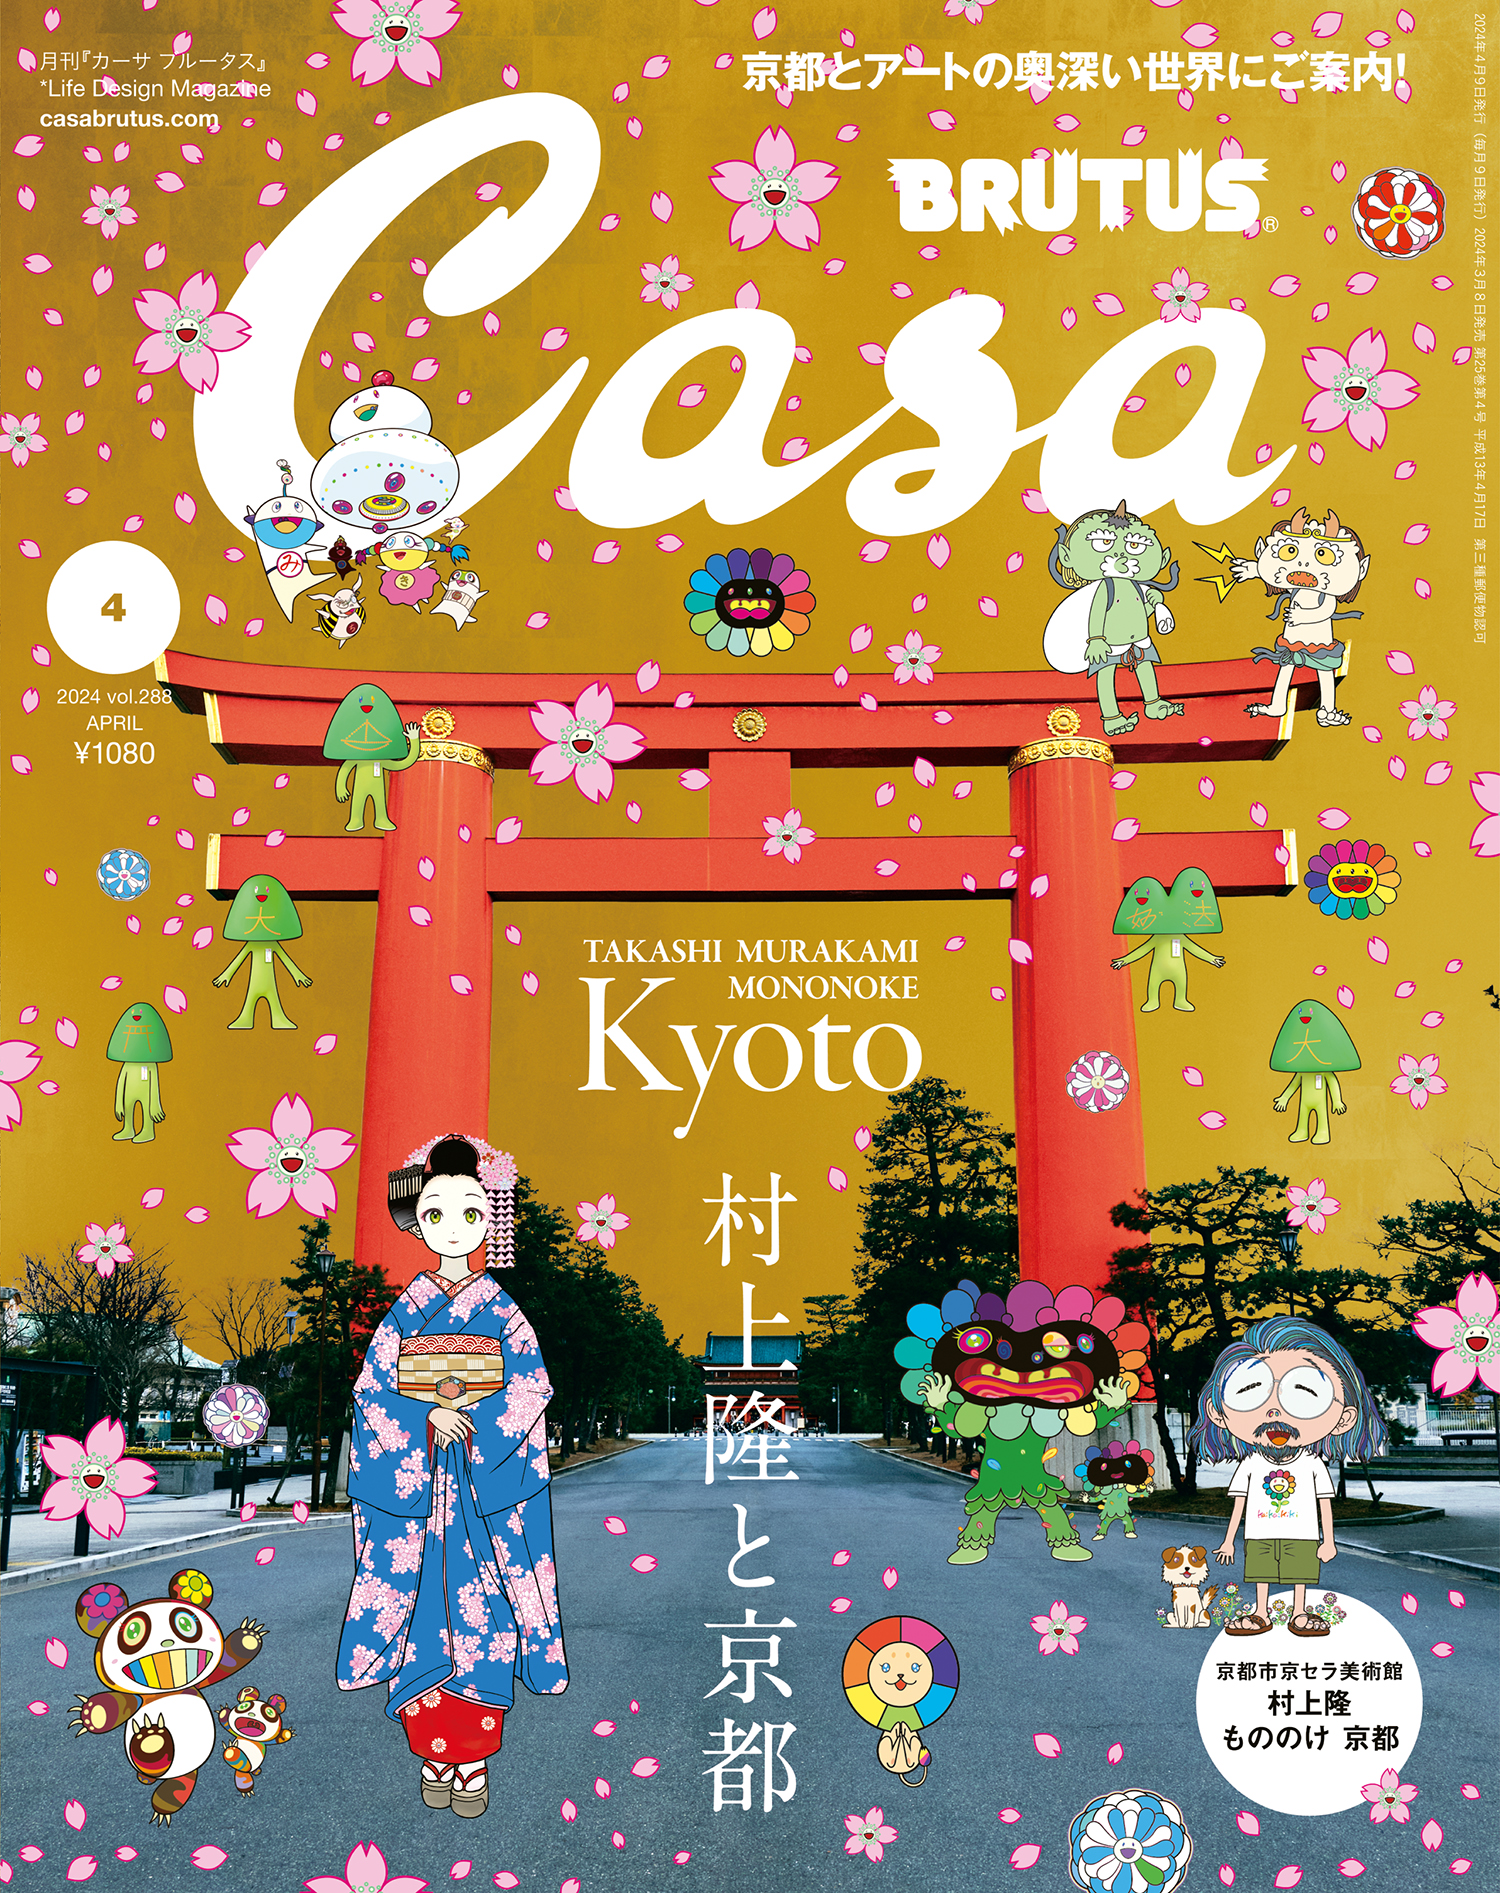 Casa BRUTUS 4月号増刊 村上隆と京都 春の京都の舞妓さん トレカ付き-